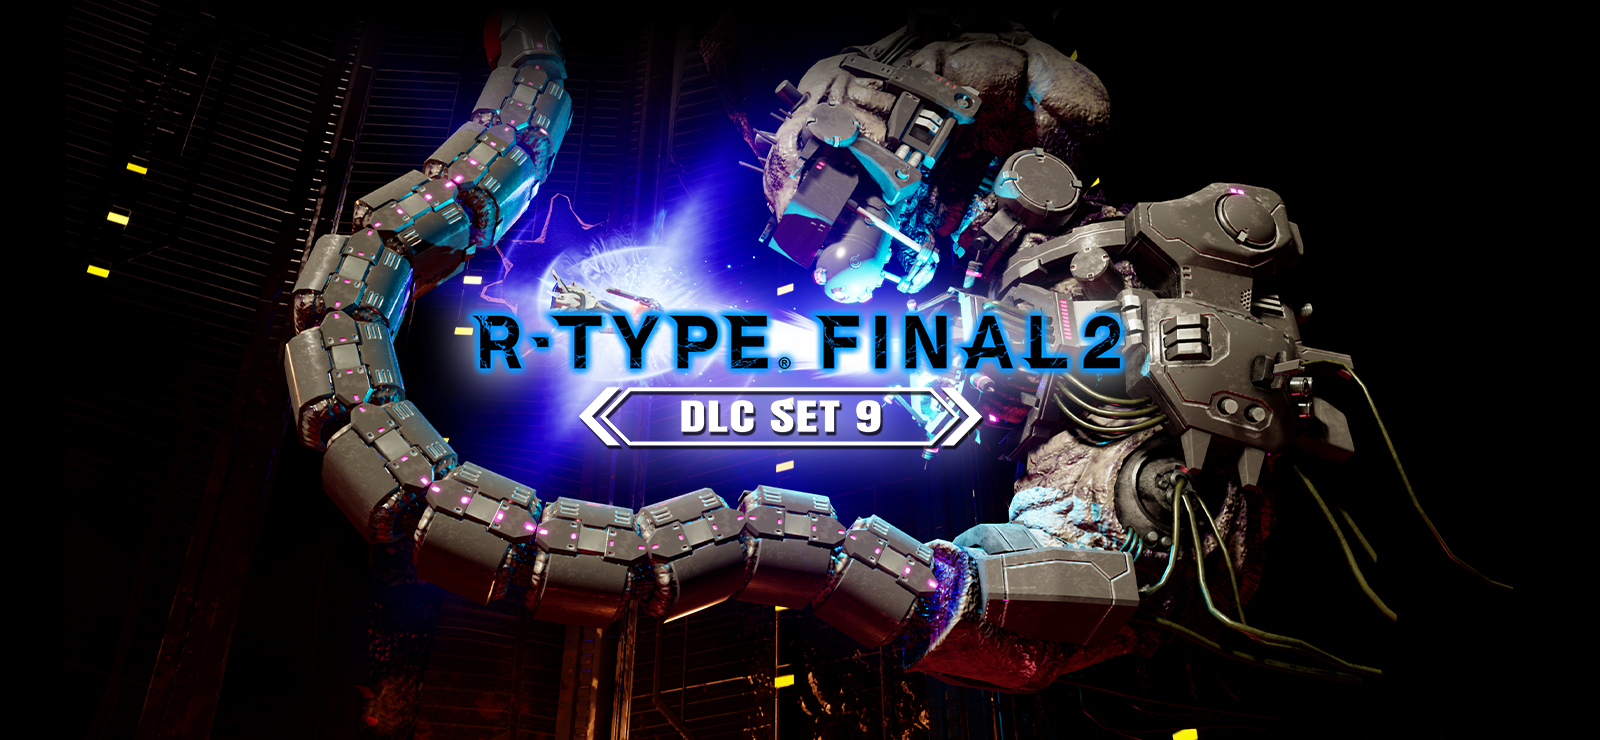 R-Type Final 2 - DLC Set 9